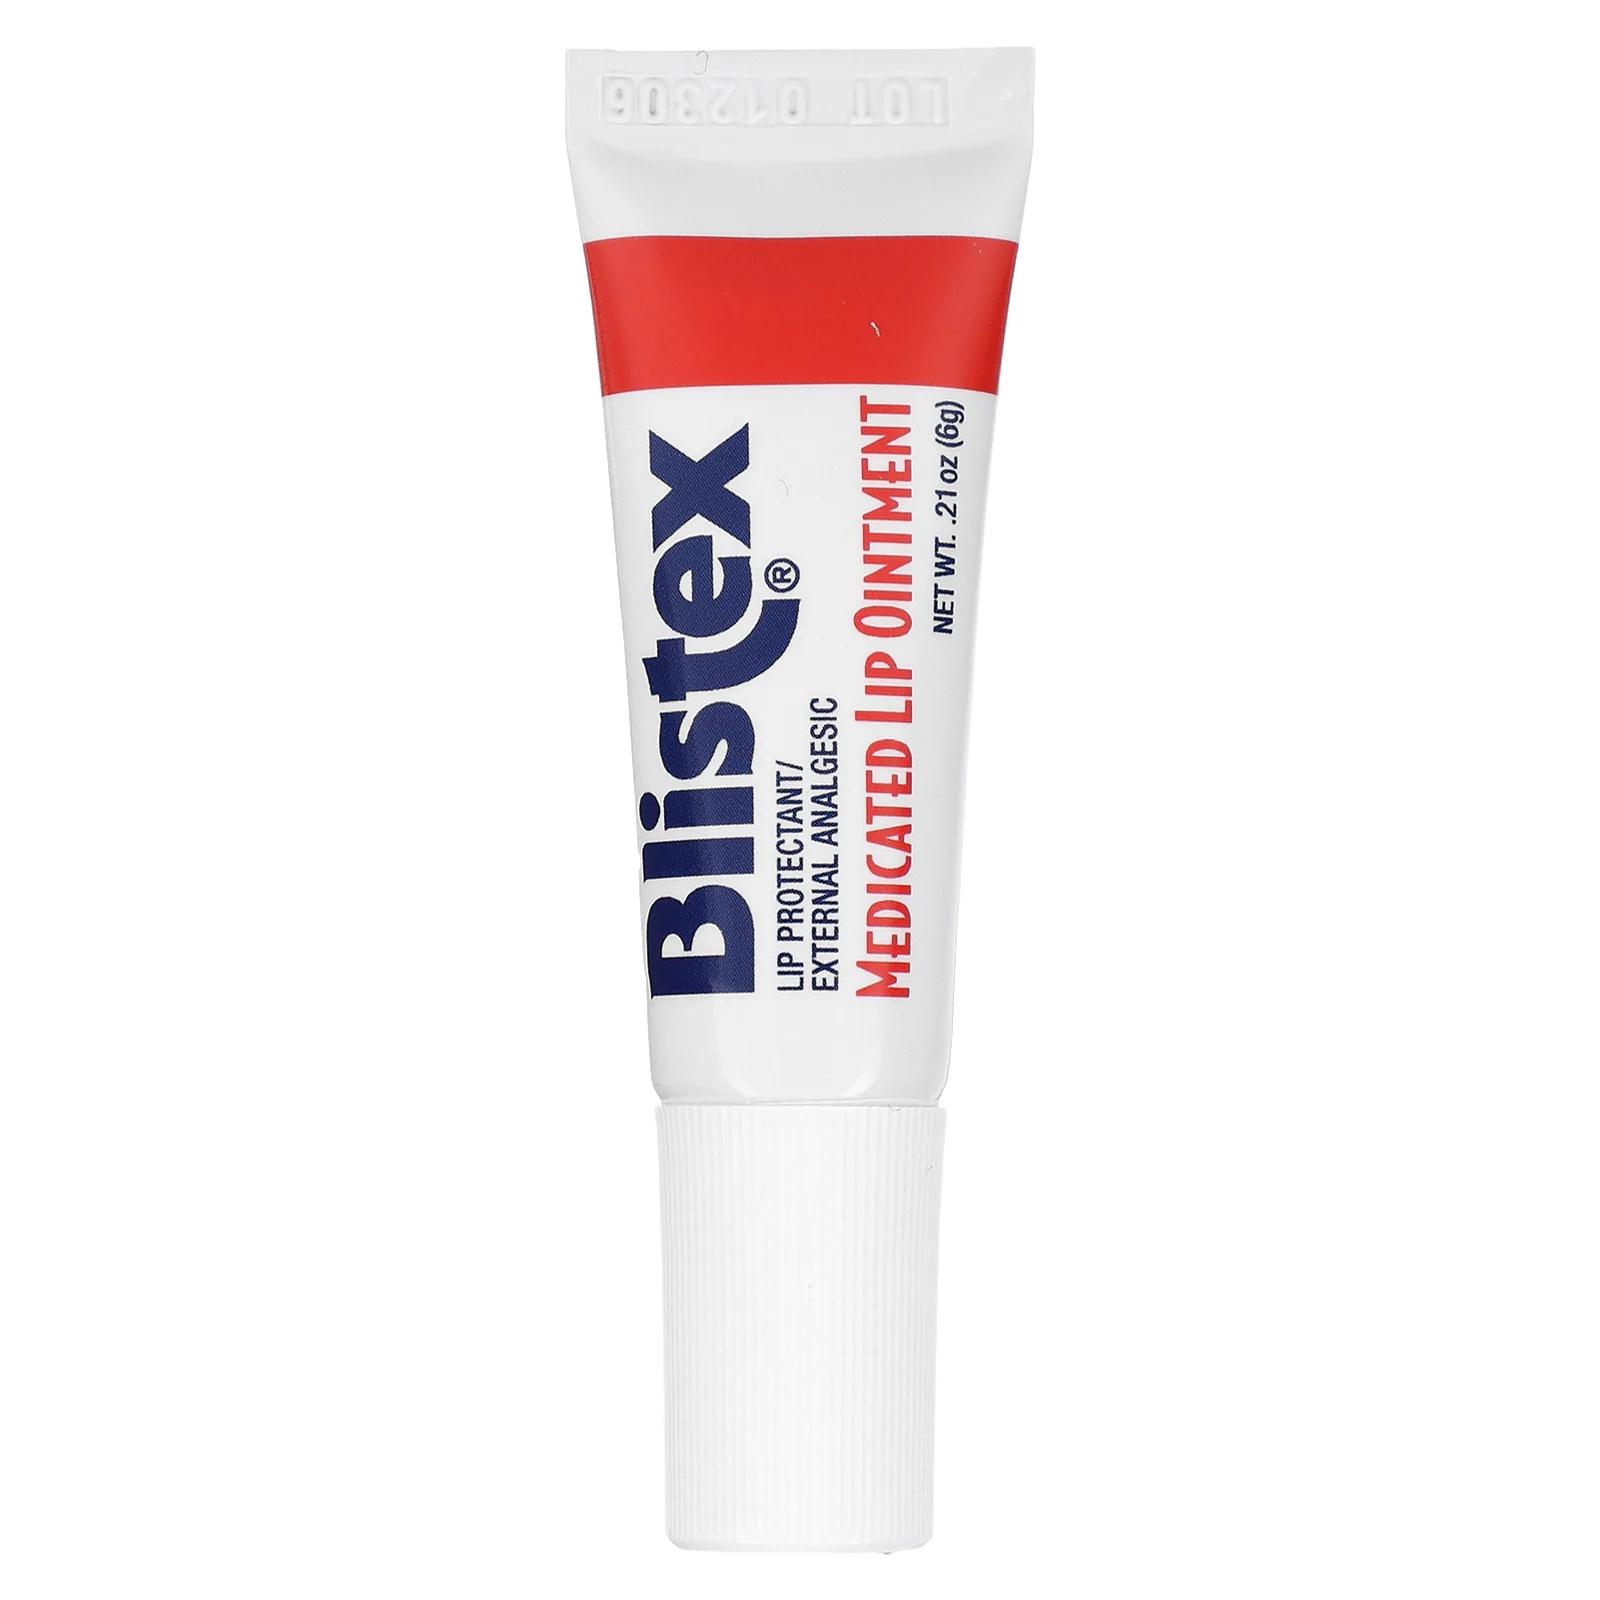 Blistex Заживляющая мазь для губ .21 унций (6 г) blistex лечебная мазь для губ 10 г 0 35 унции